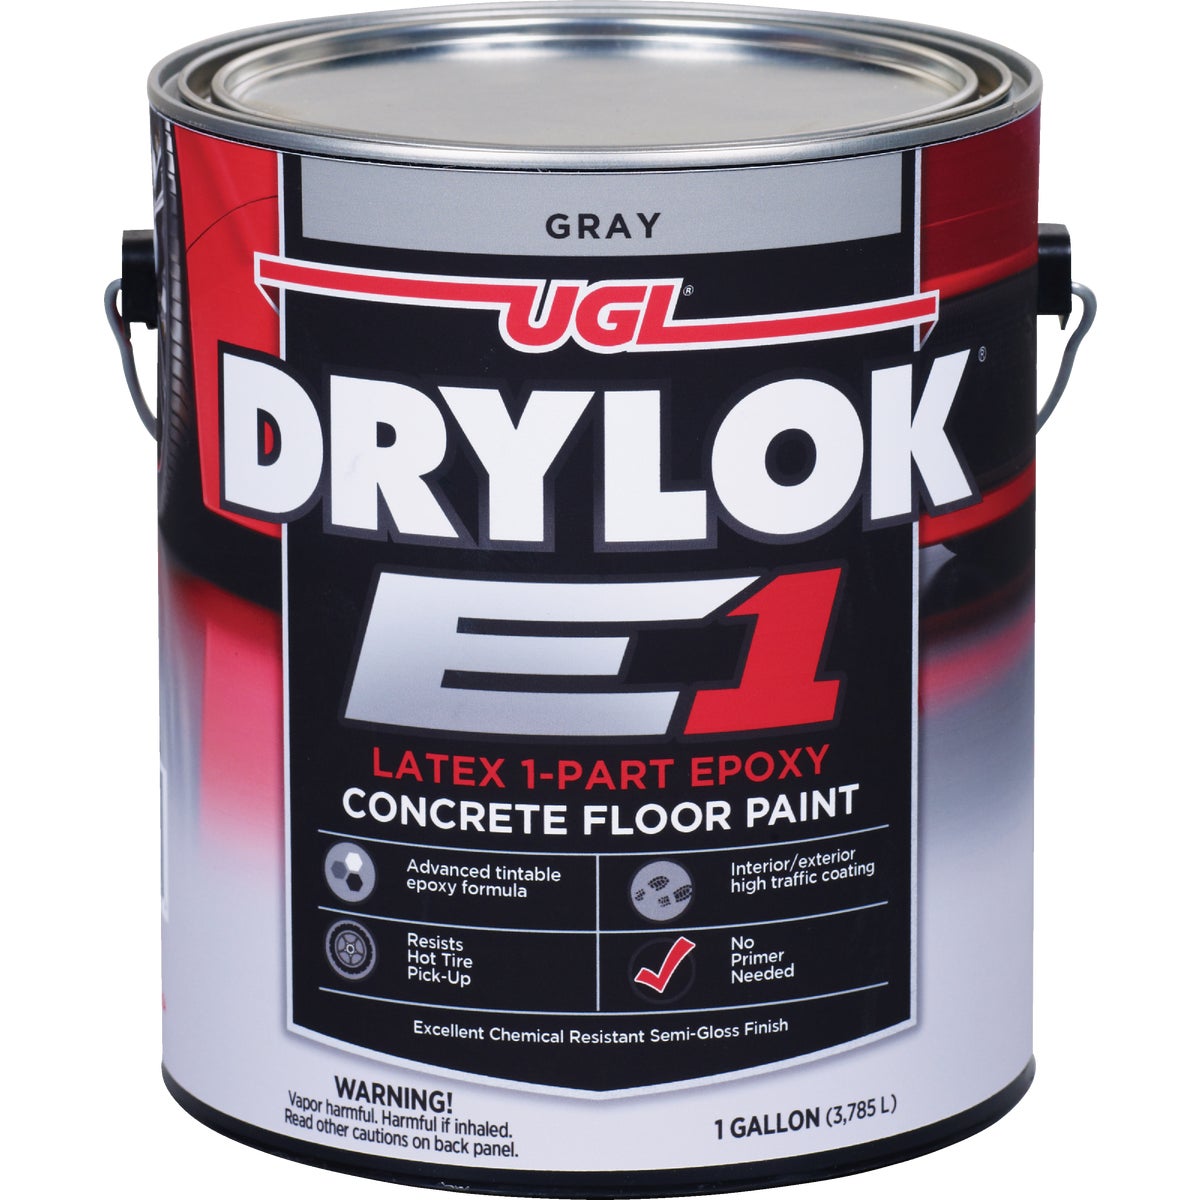 DRYLOK E1 One-Part Epoxy Concrete Floor Paint Gray, 1 Gal.